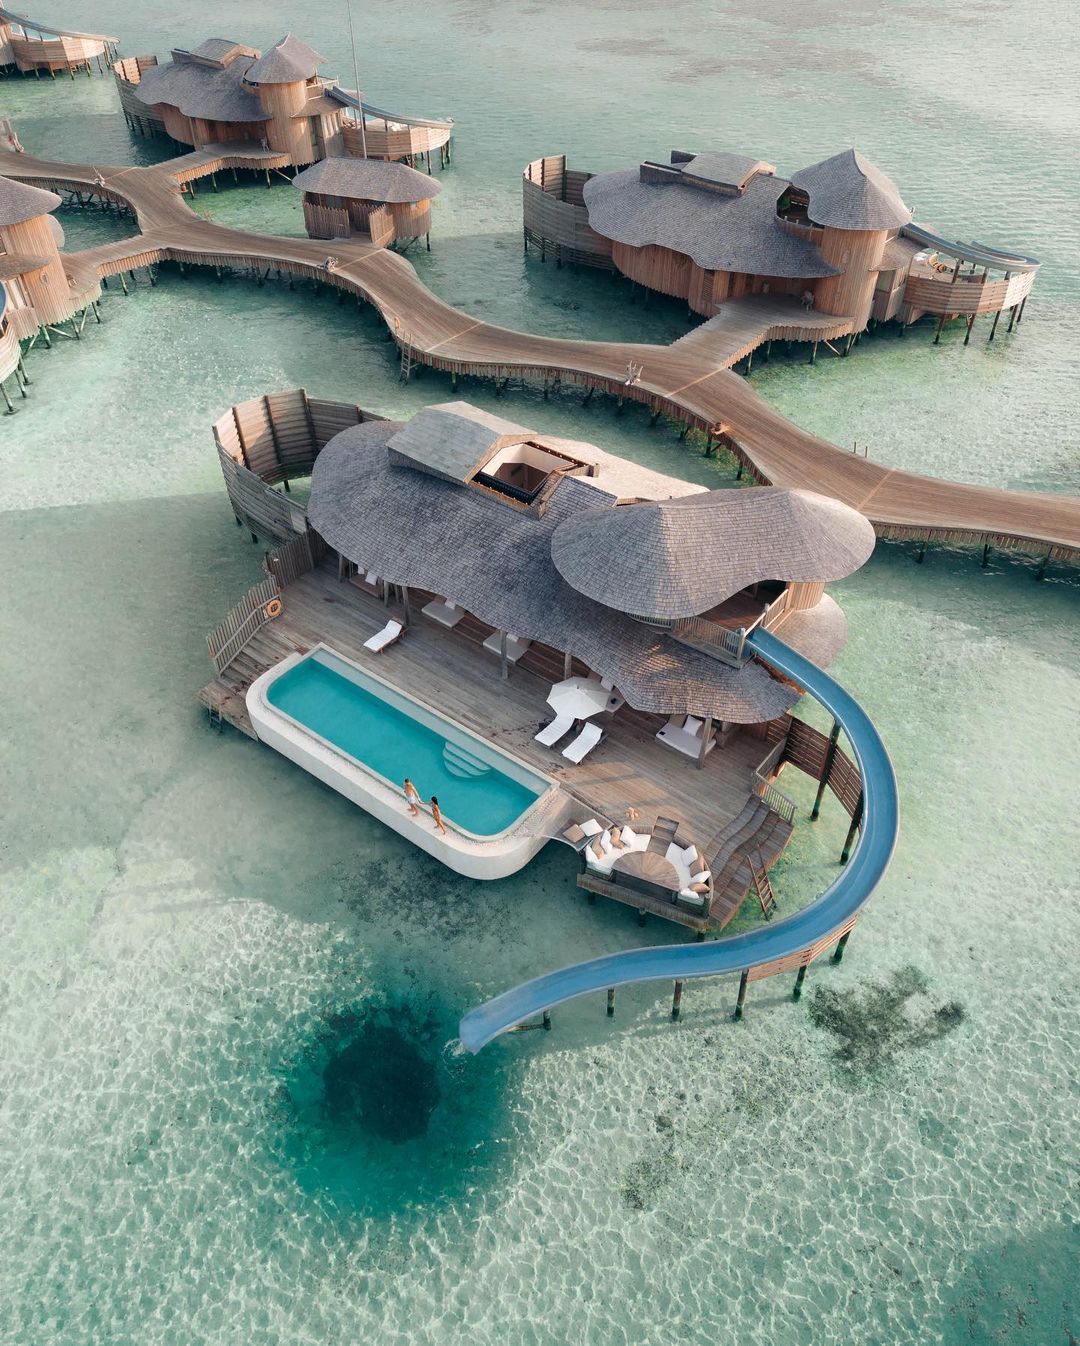 SONEVA JANI - 10 Best Luxury Resorts in the Maldives